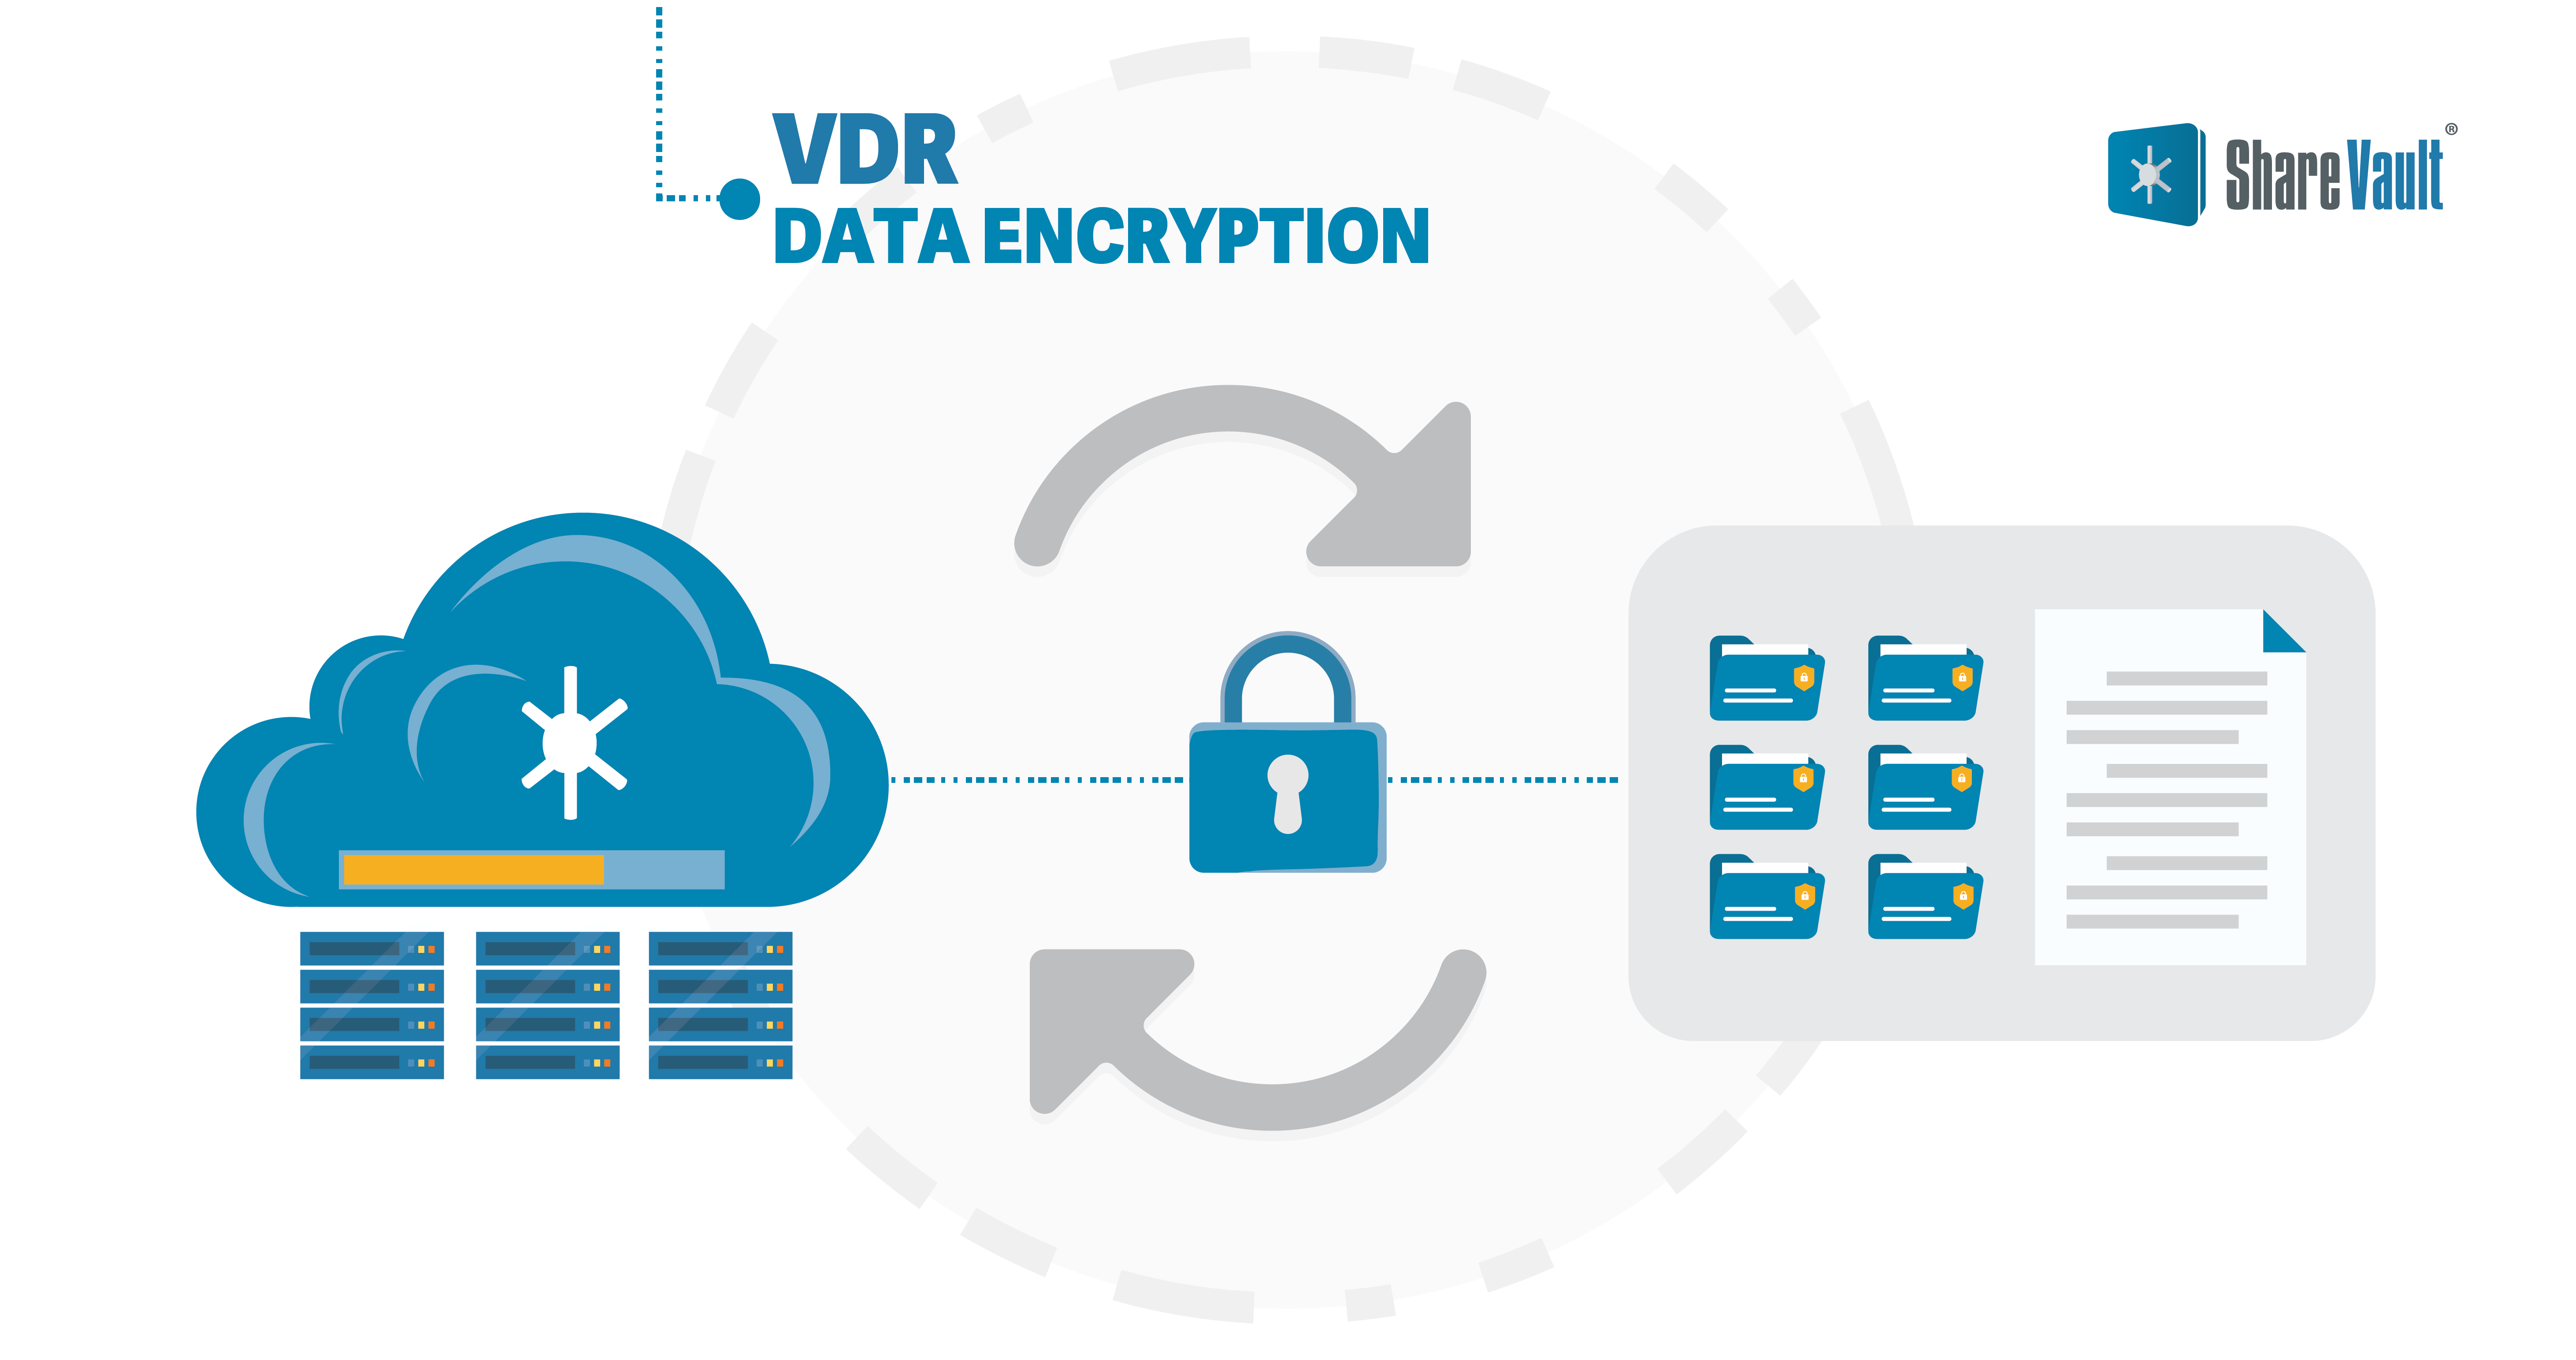 VDR data encryption